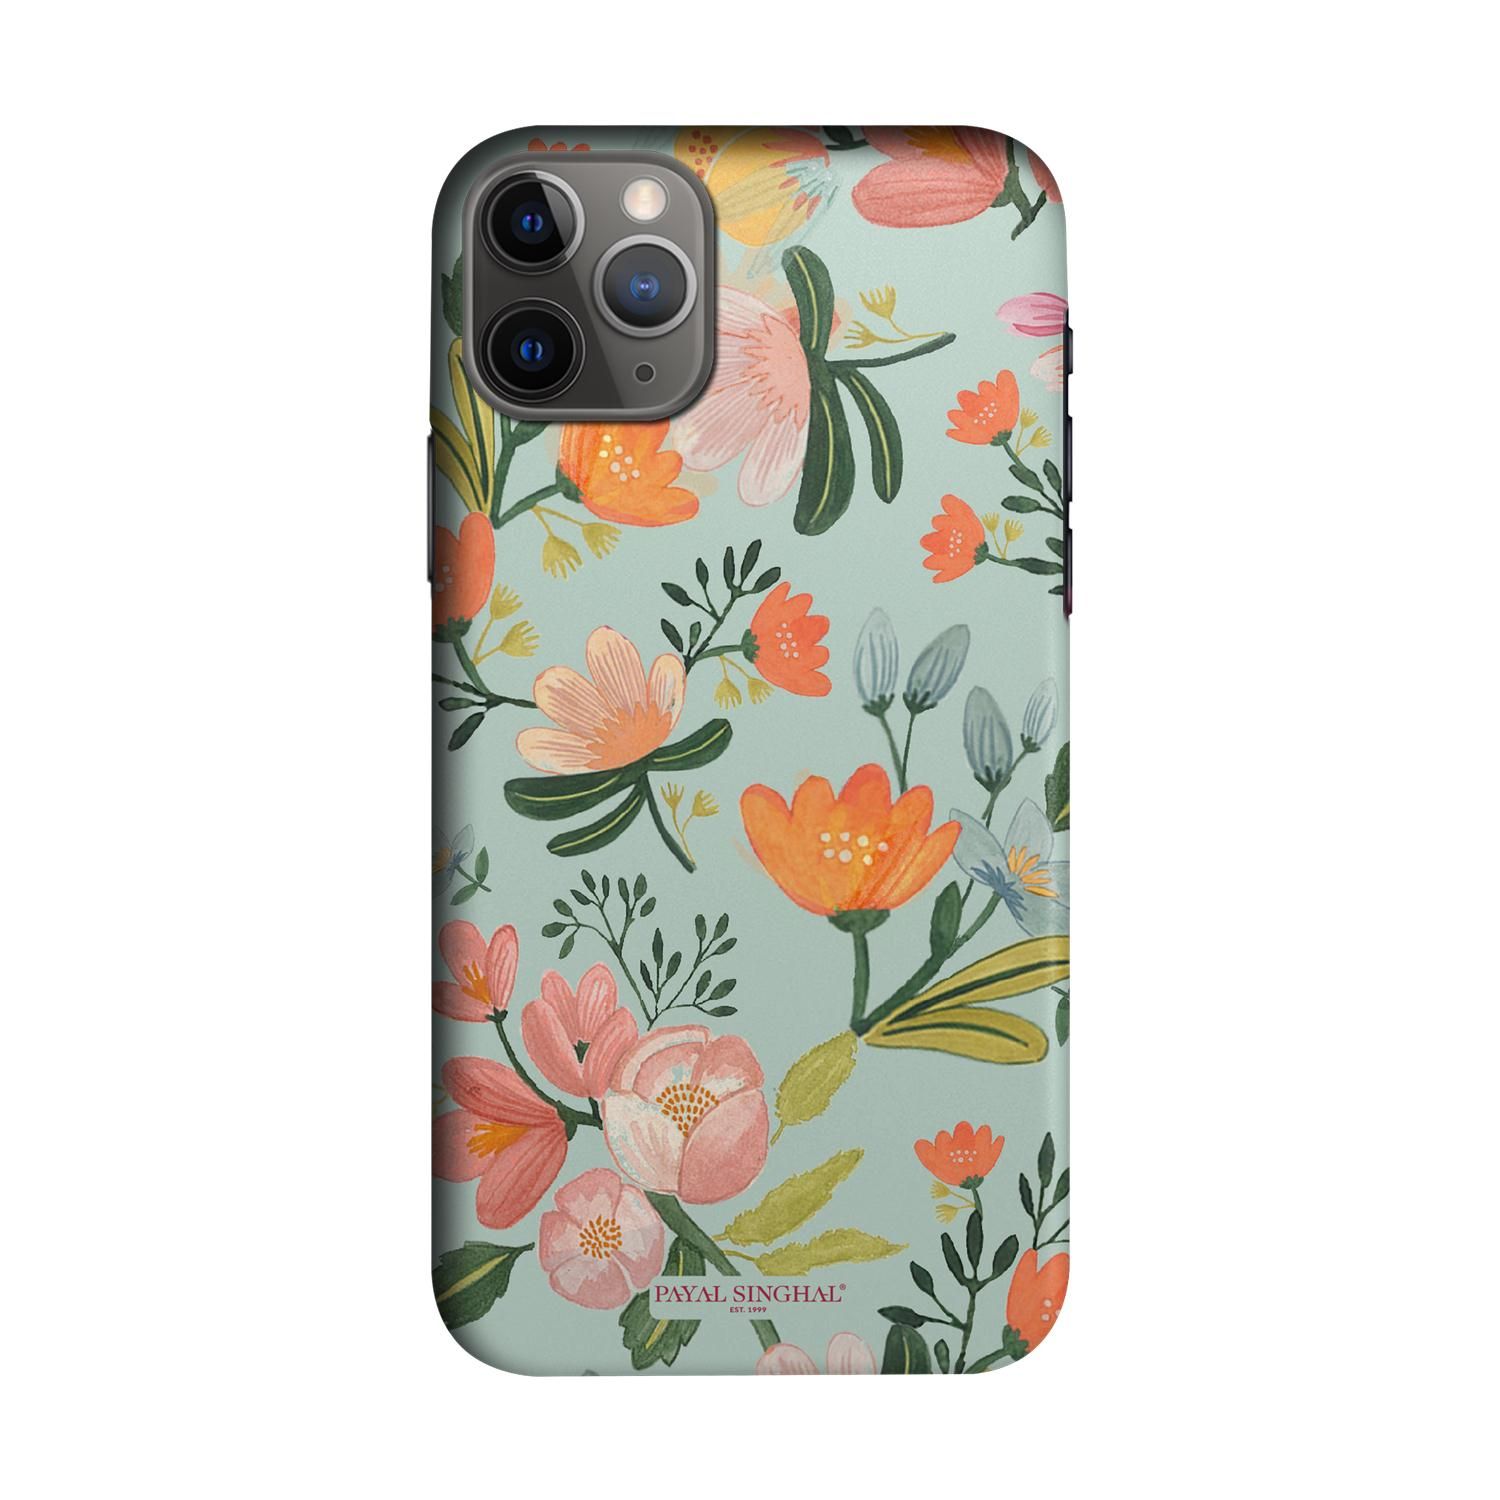 Payal Singhal Aqua Handpainted Flower - Sleek Phone Case for iPhone 11 Pro Max